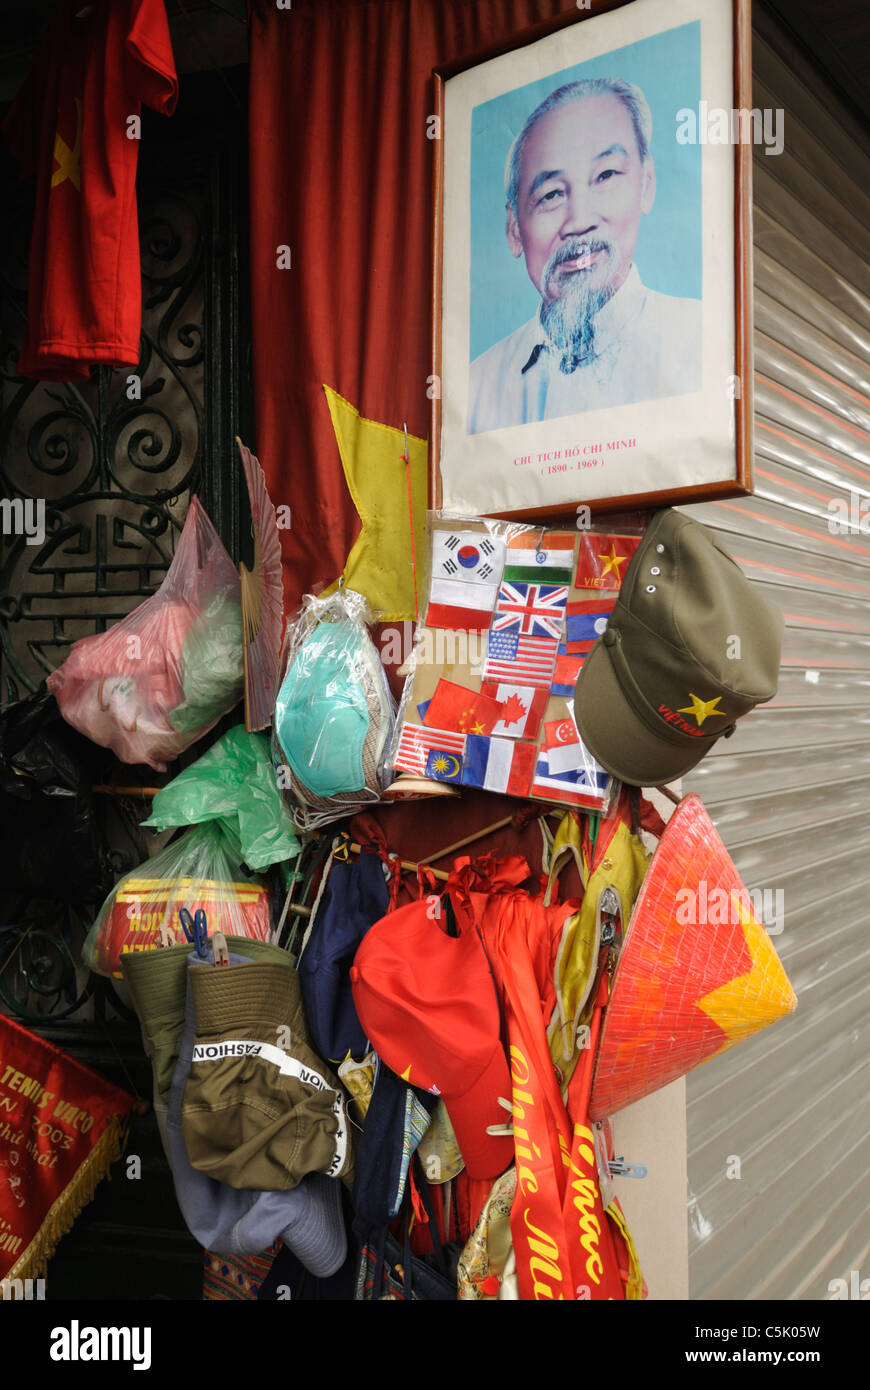 Asia, Vietnam, Hanoi. Shop with framed Ho Chi Minh portrait. Stock Photo